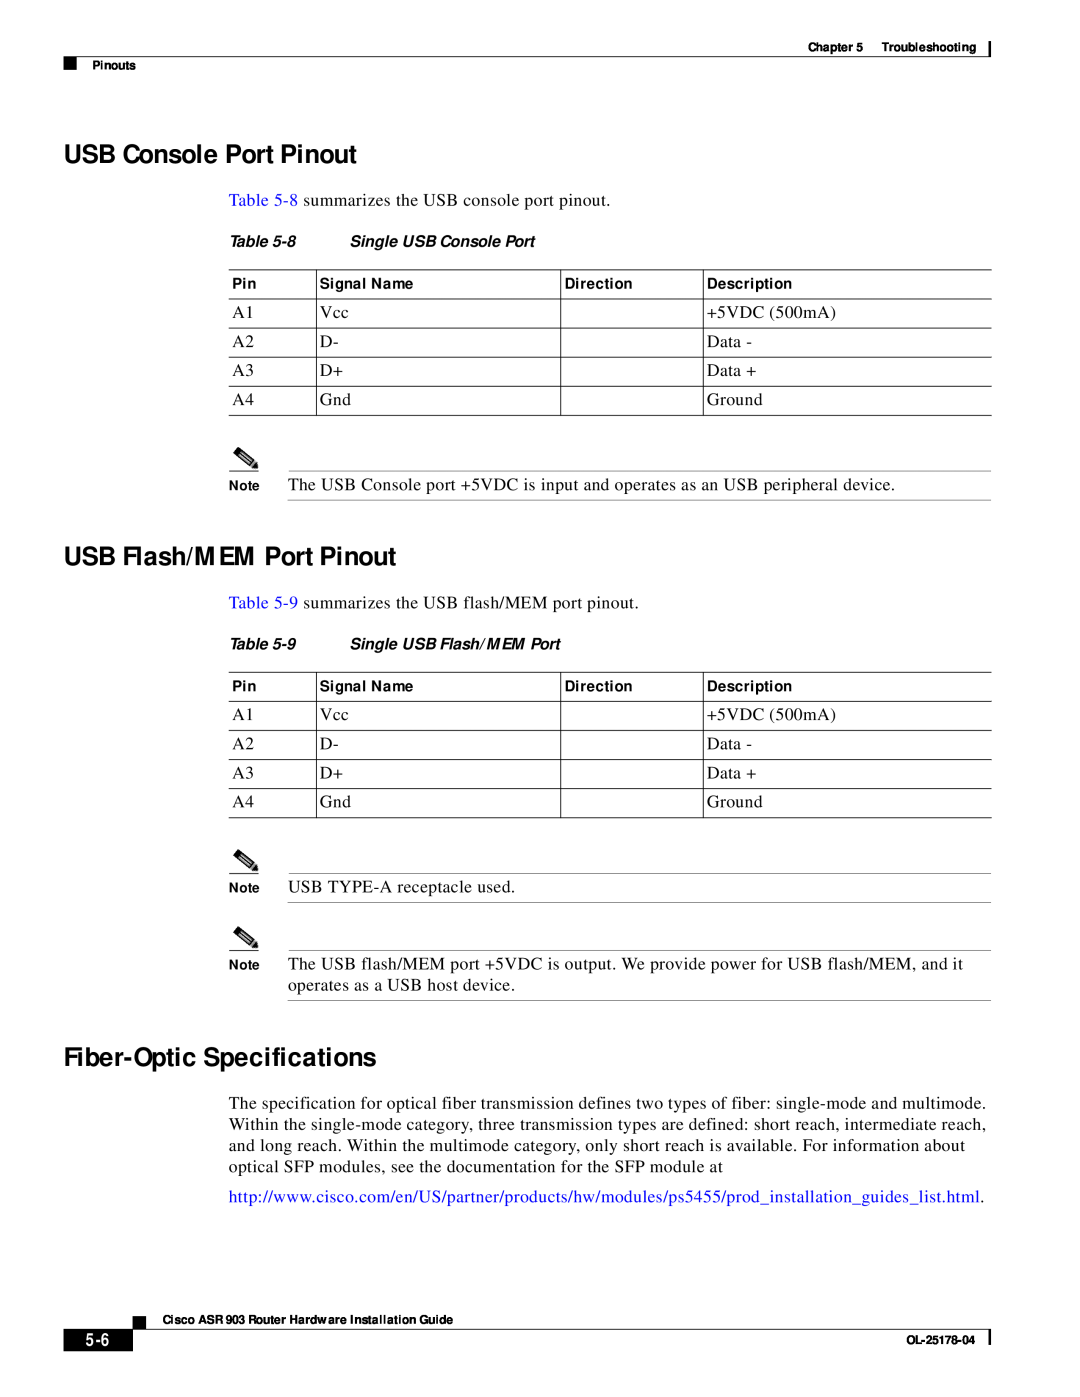 Cisco Systems ASR 903 manual USB Console Port Pinout, USB Flash/MEM Port Pinout, Fiber-Optic Specifications 